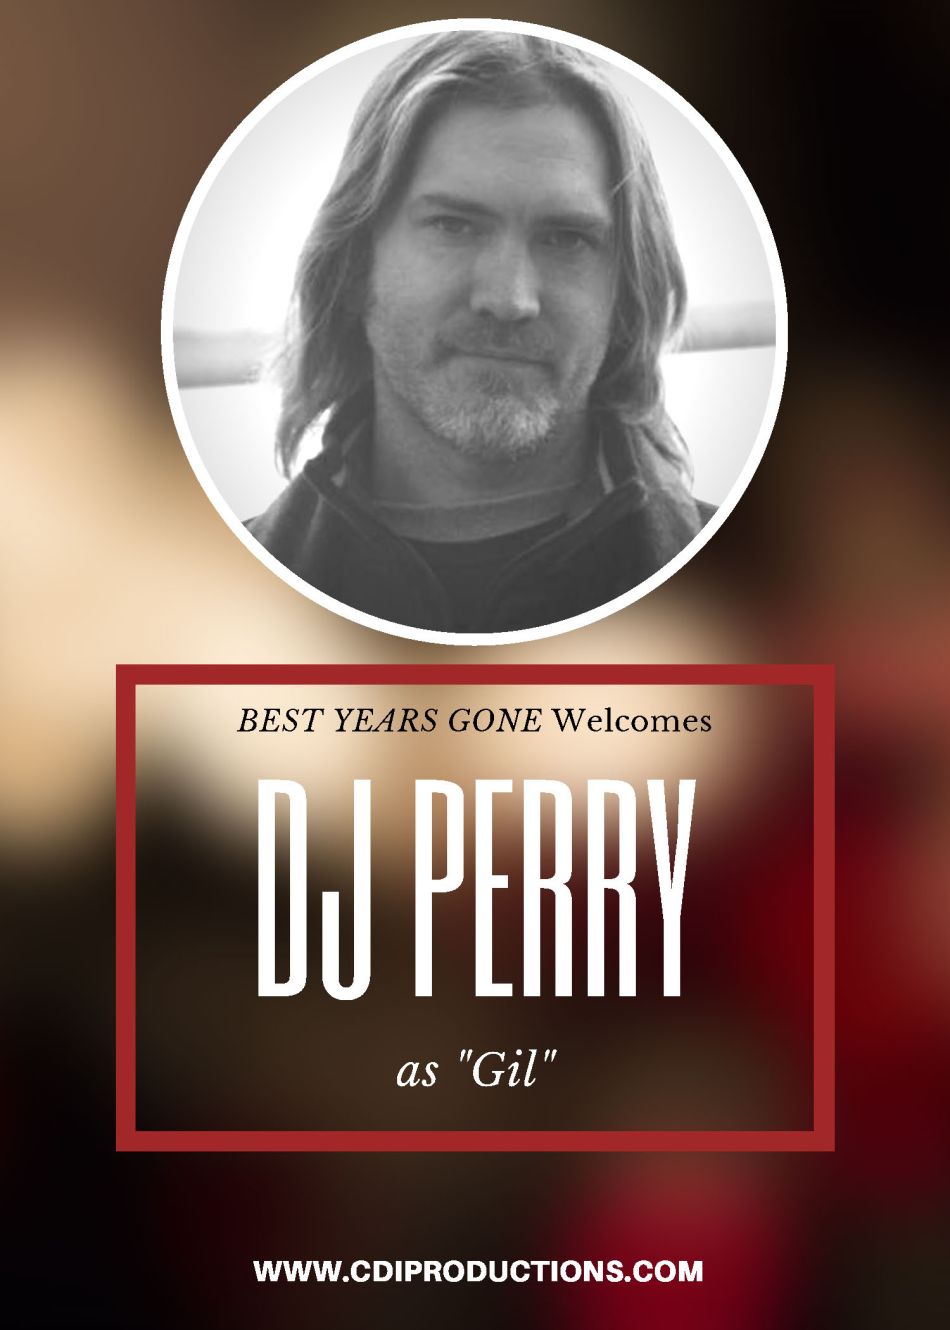 DJ Perry